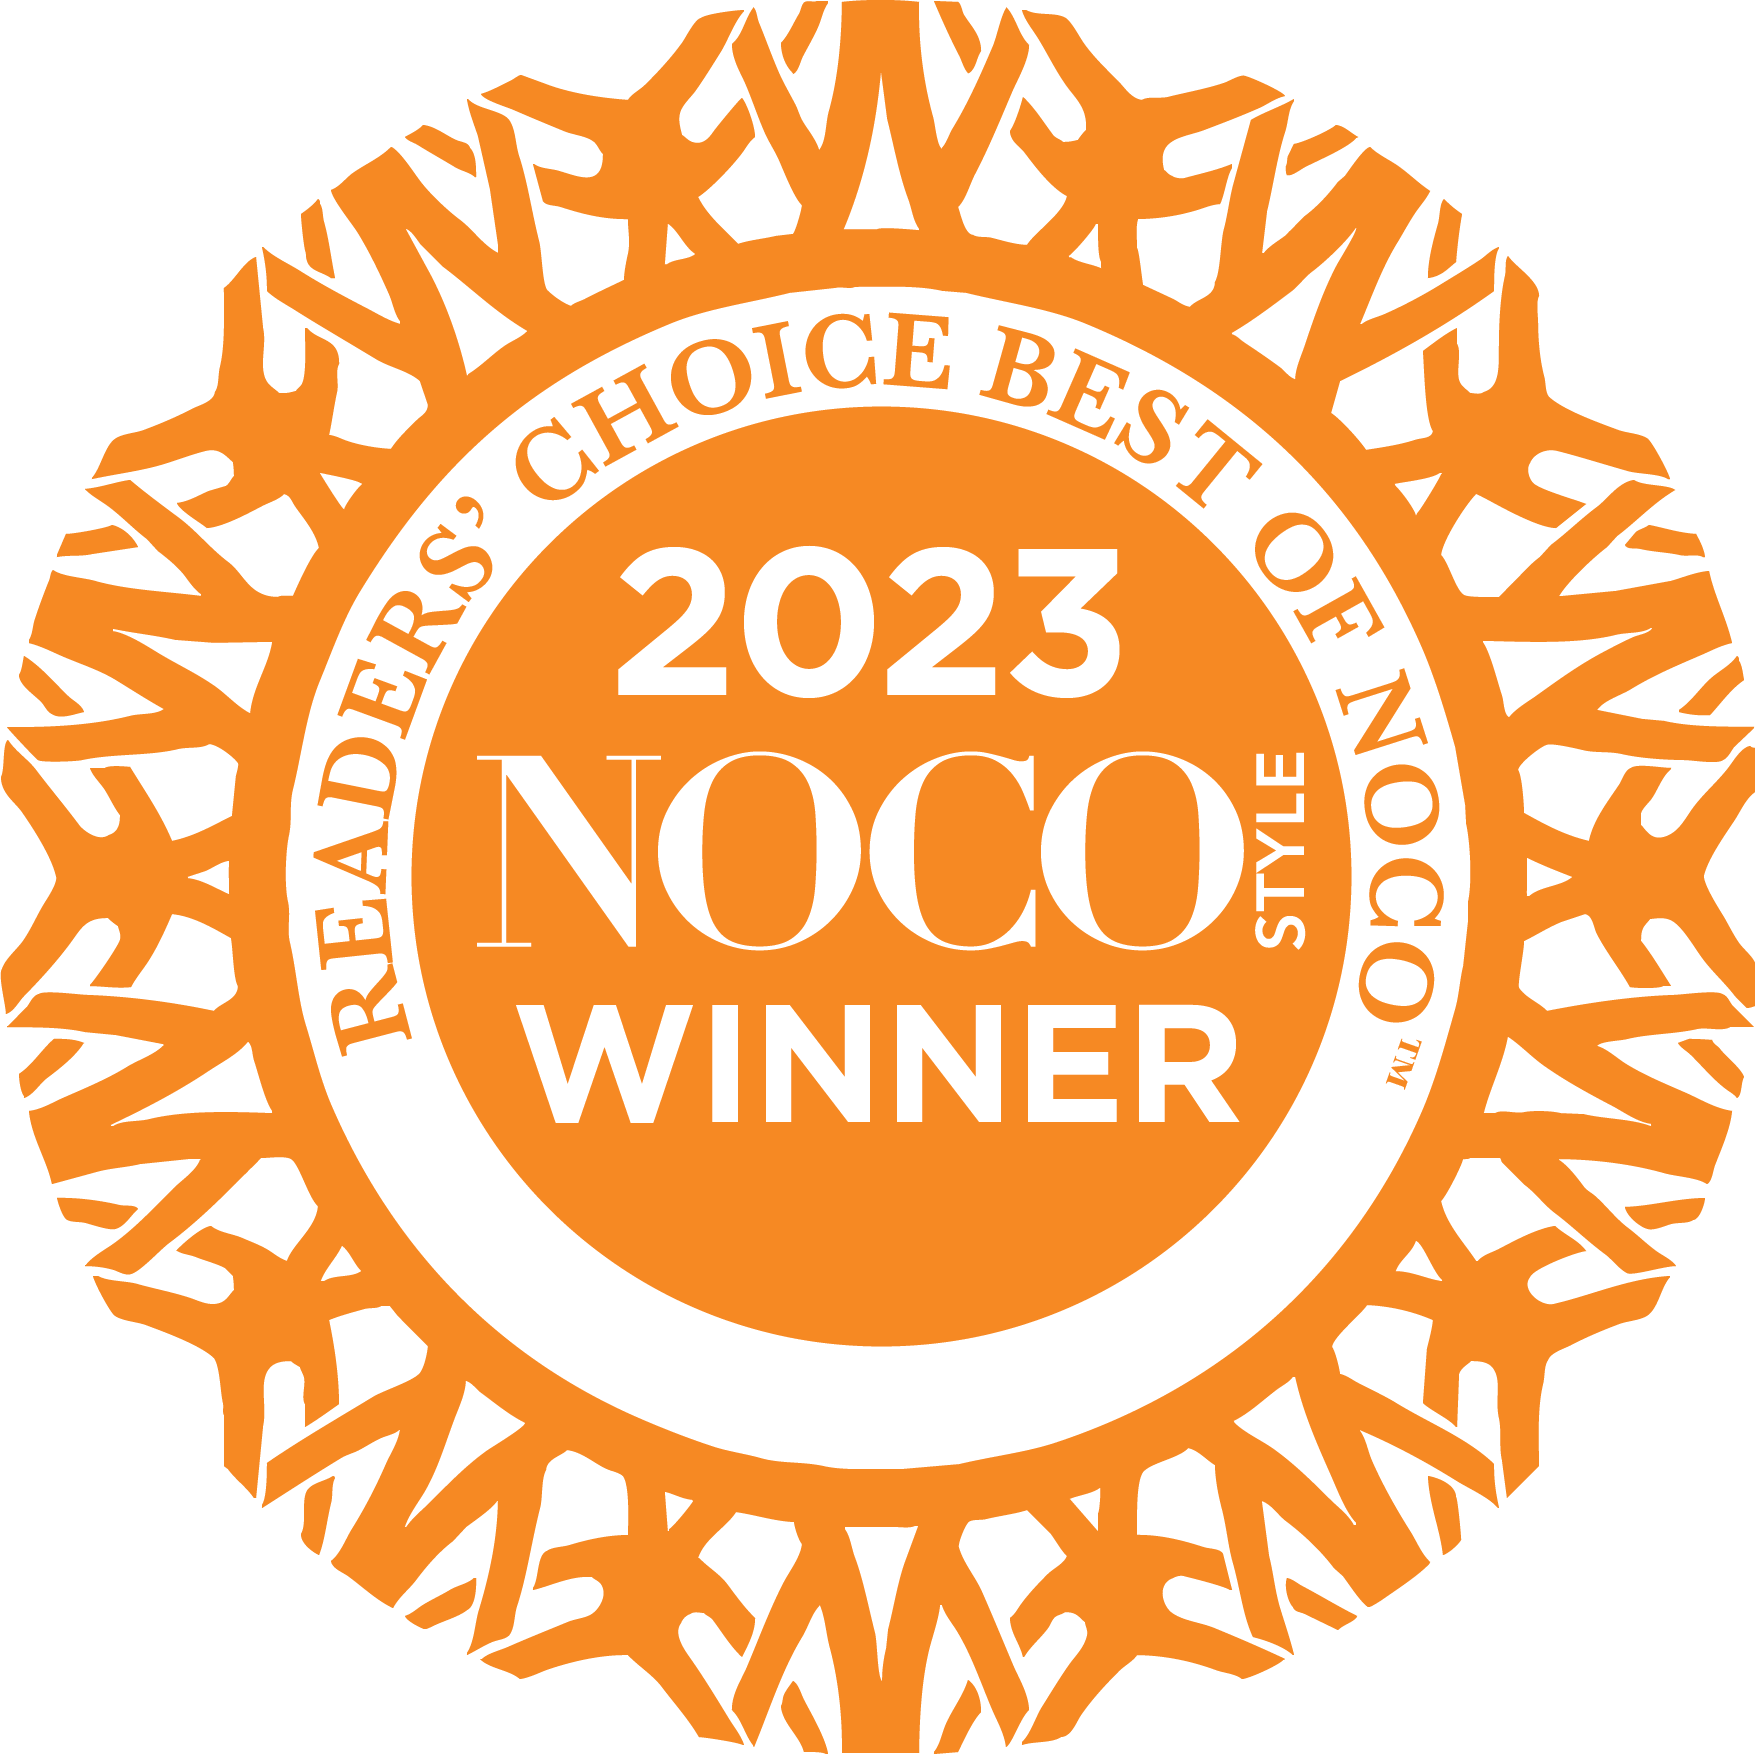 Readers Choice Best of Noco 2023 NOCO winner logo